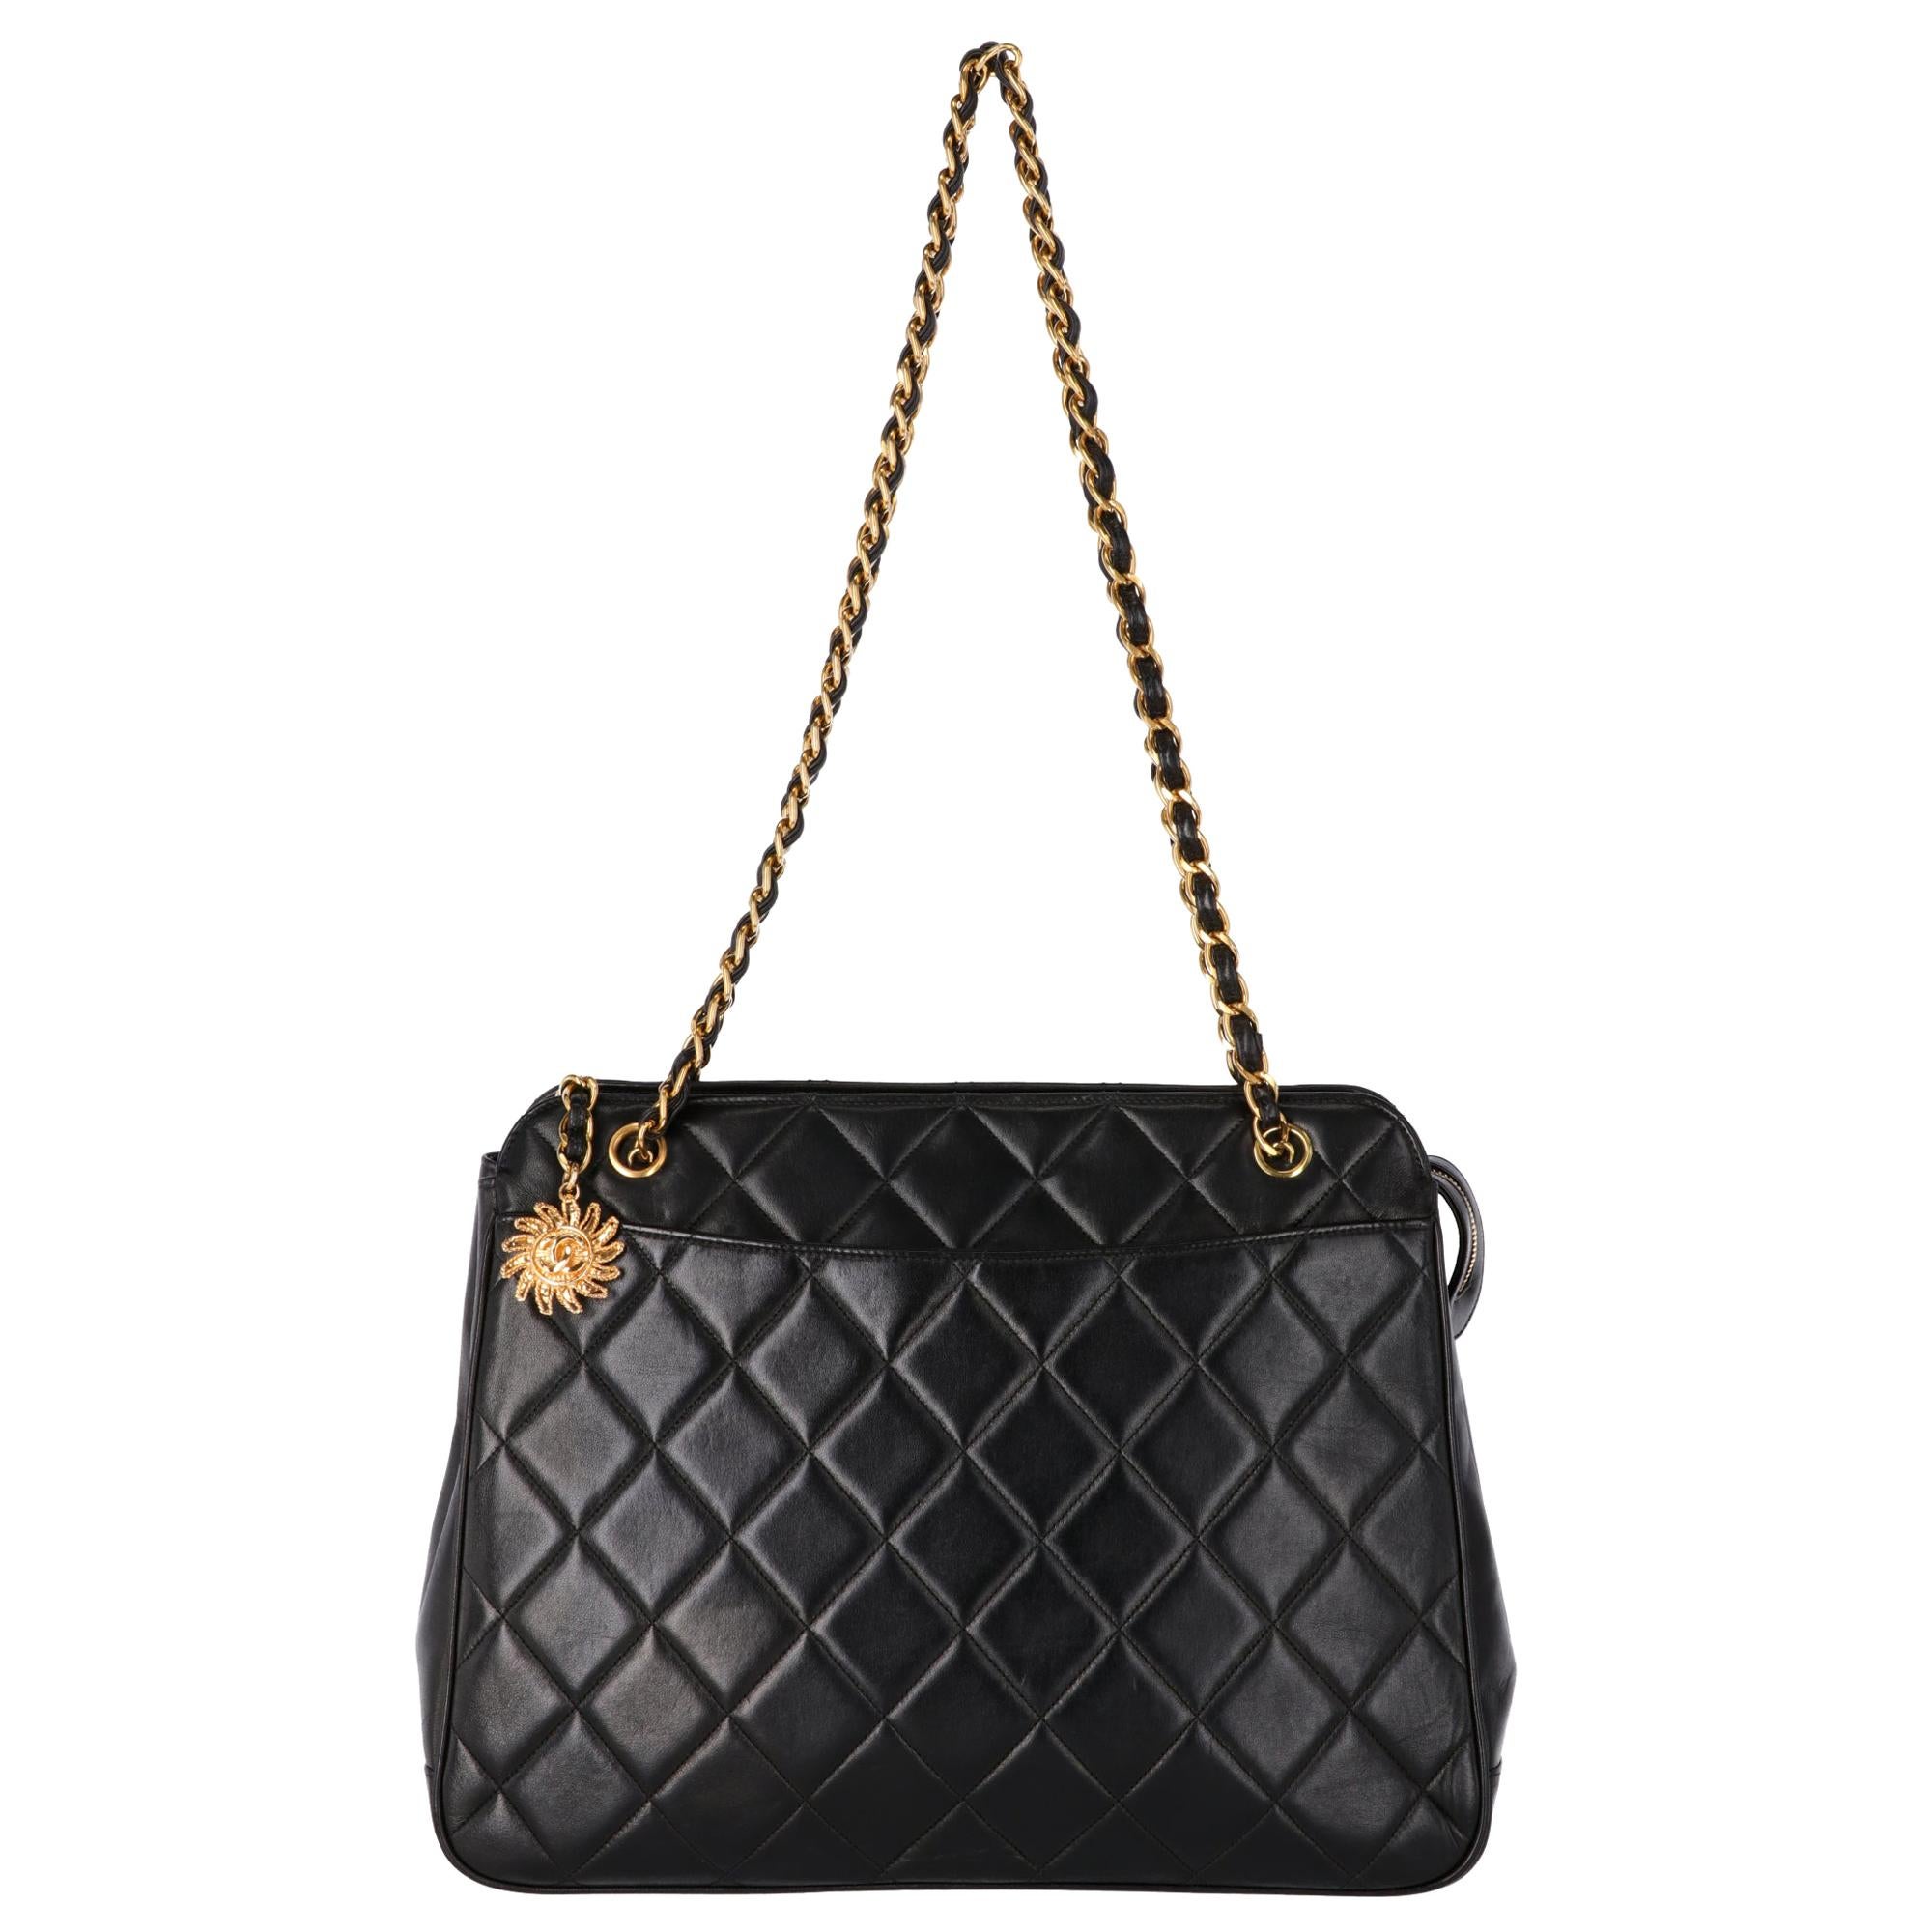 1990s Chanel 36 cm Black Bag